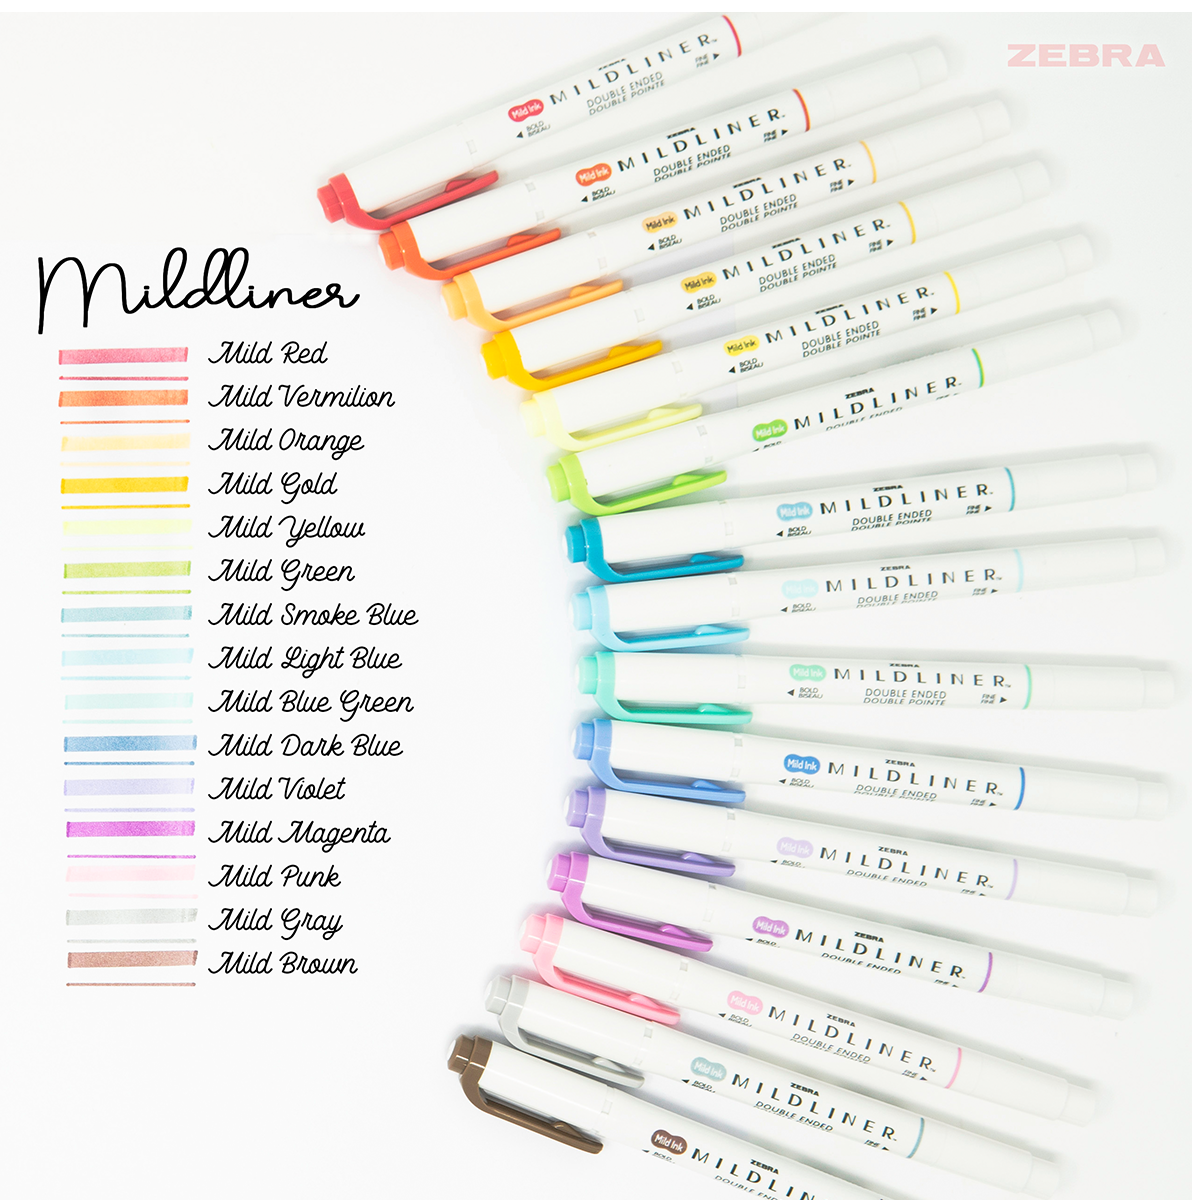 Mildliner 15-pack in the group Pens / Artist Pens / Illustration Markers at Pen Store (127933)